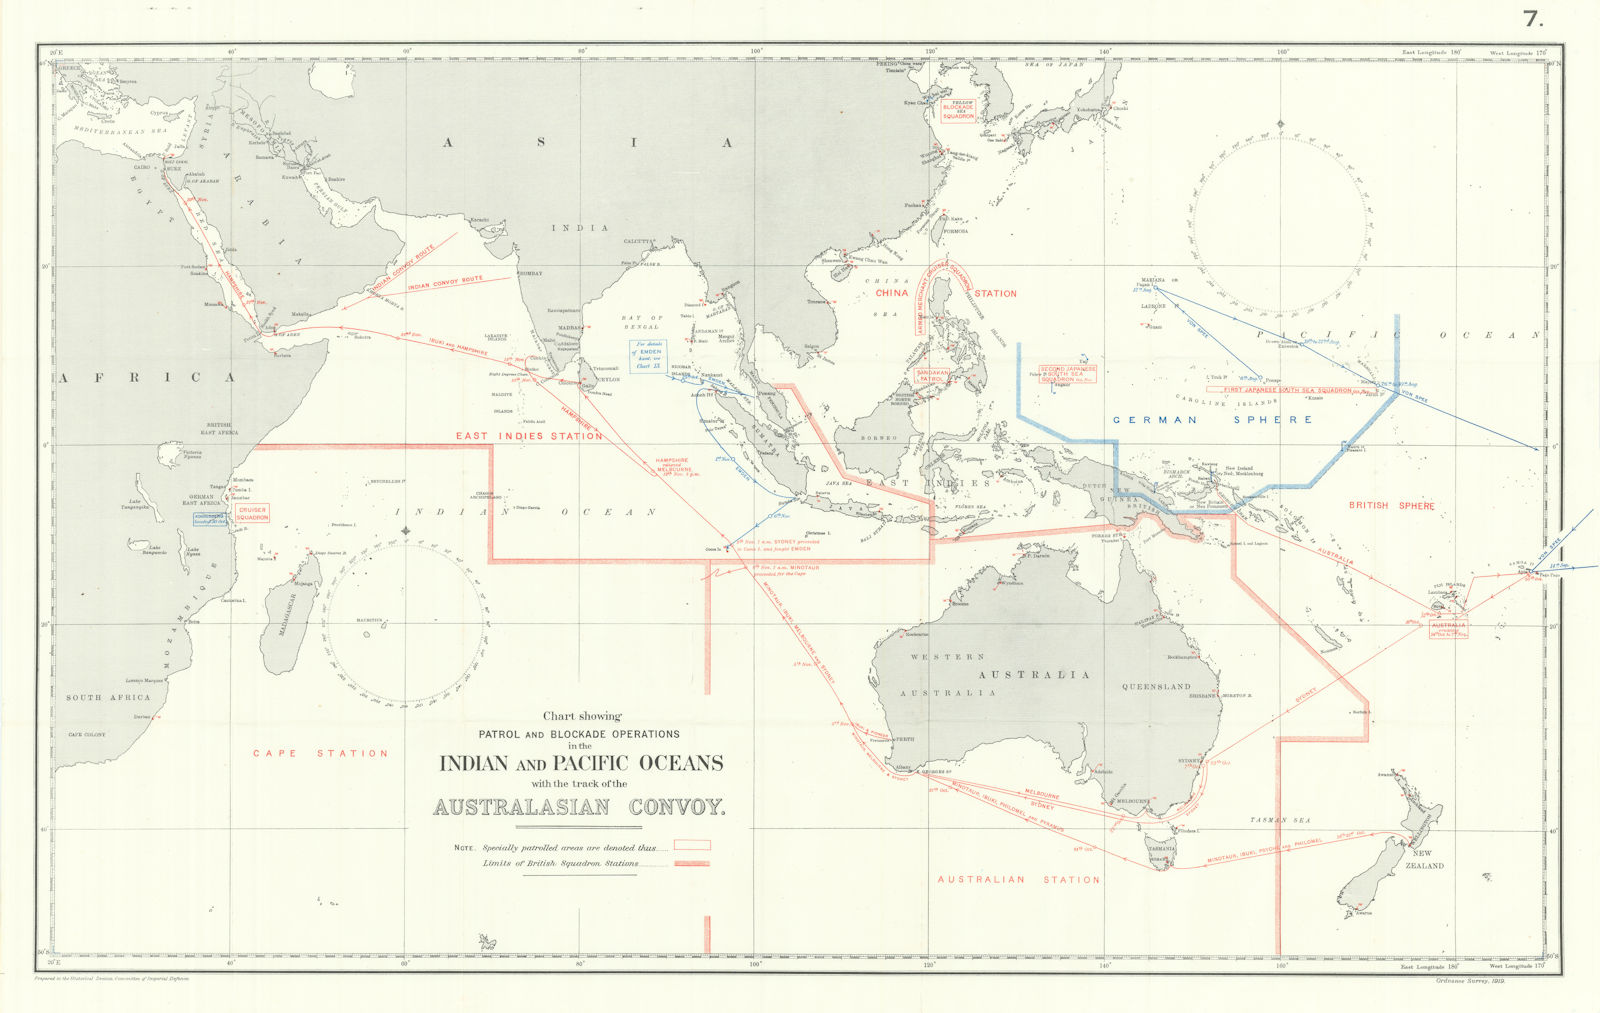 Indian & Pacific Oceans. Australasian Convoy 1914. First World War. 1920 map